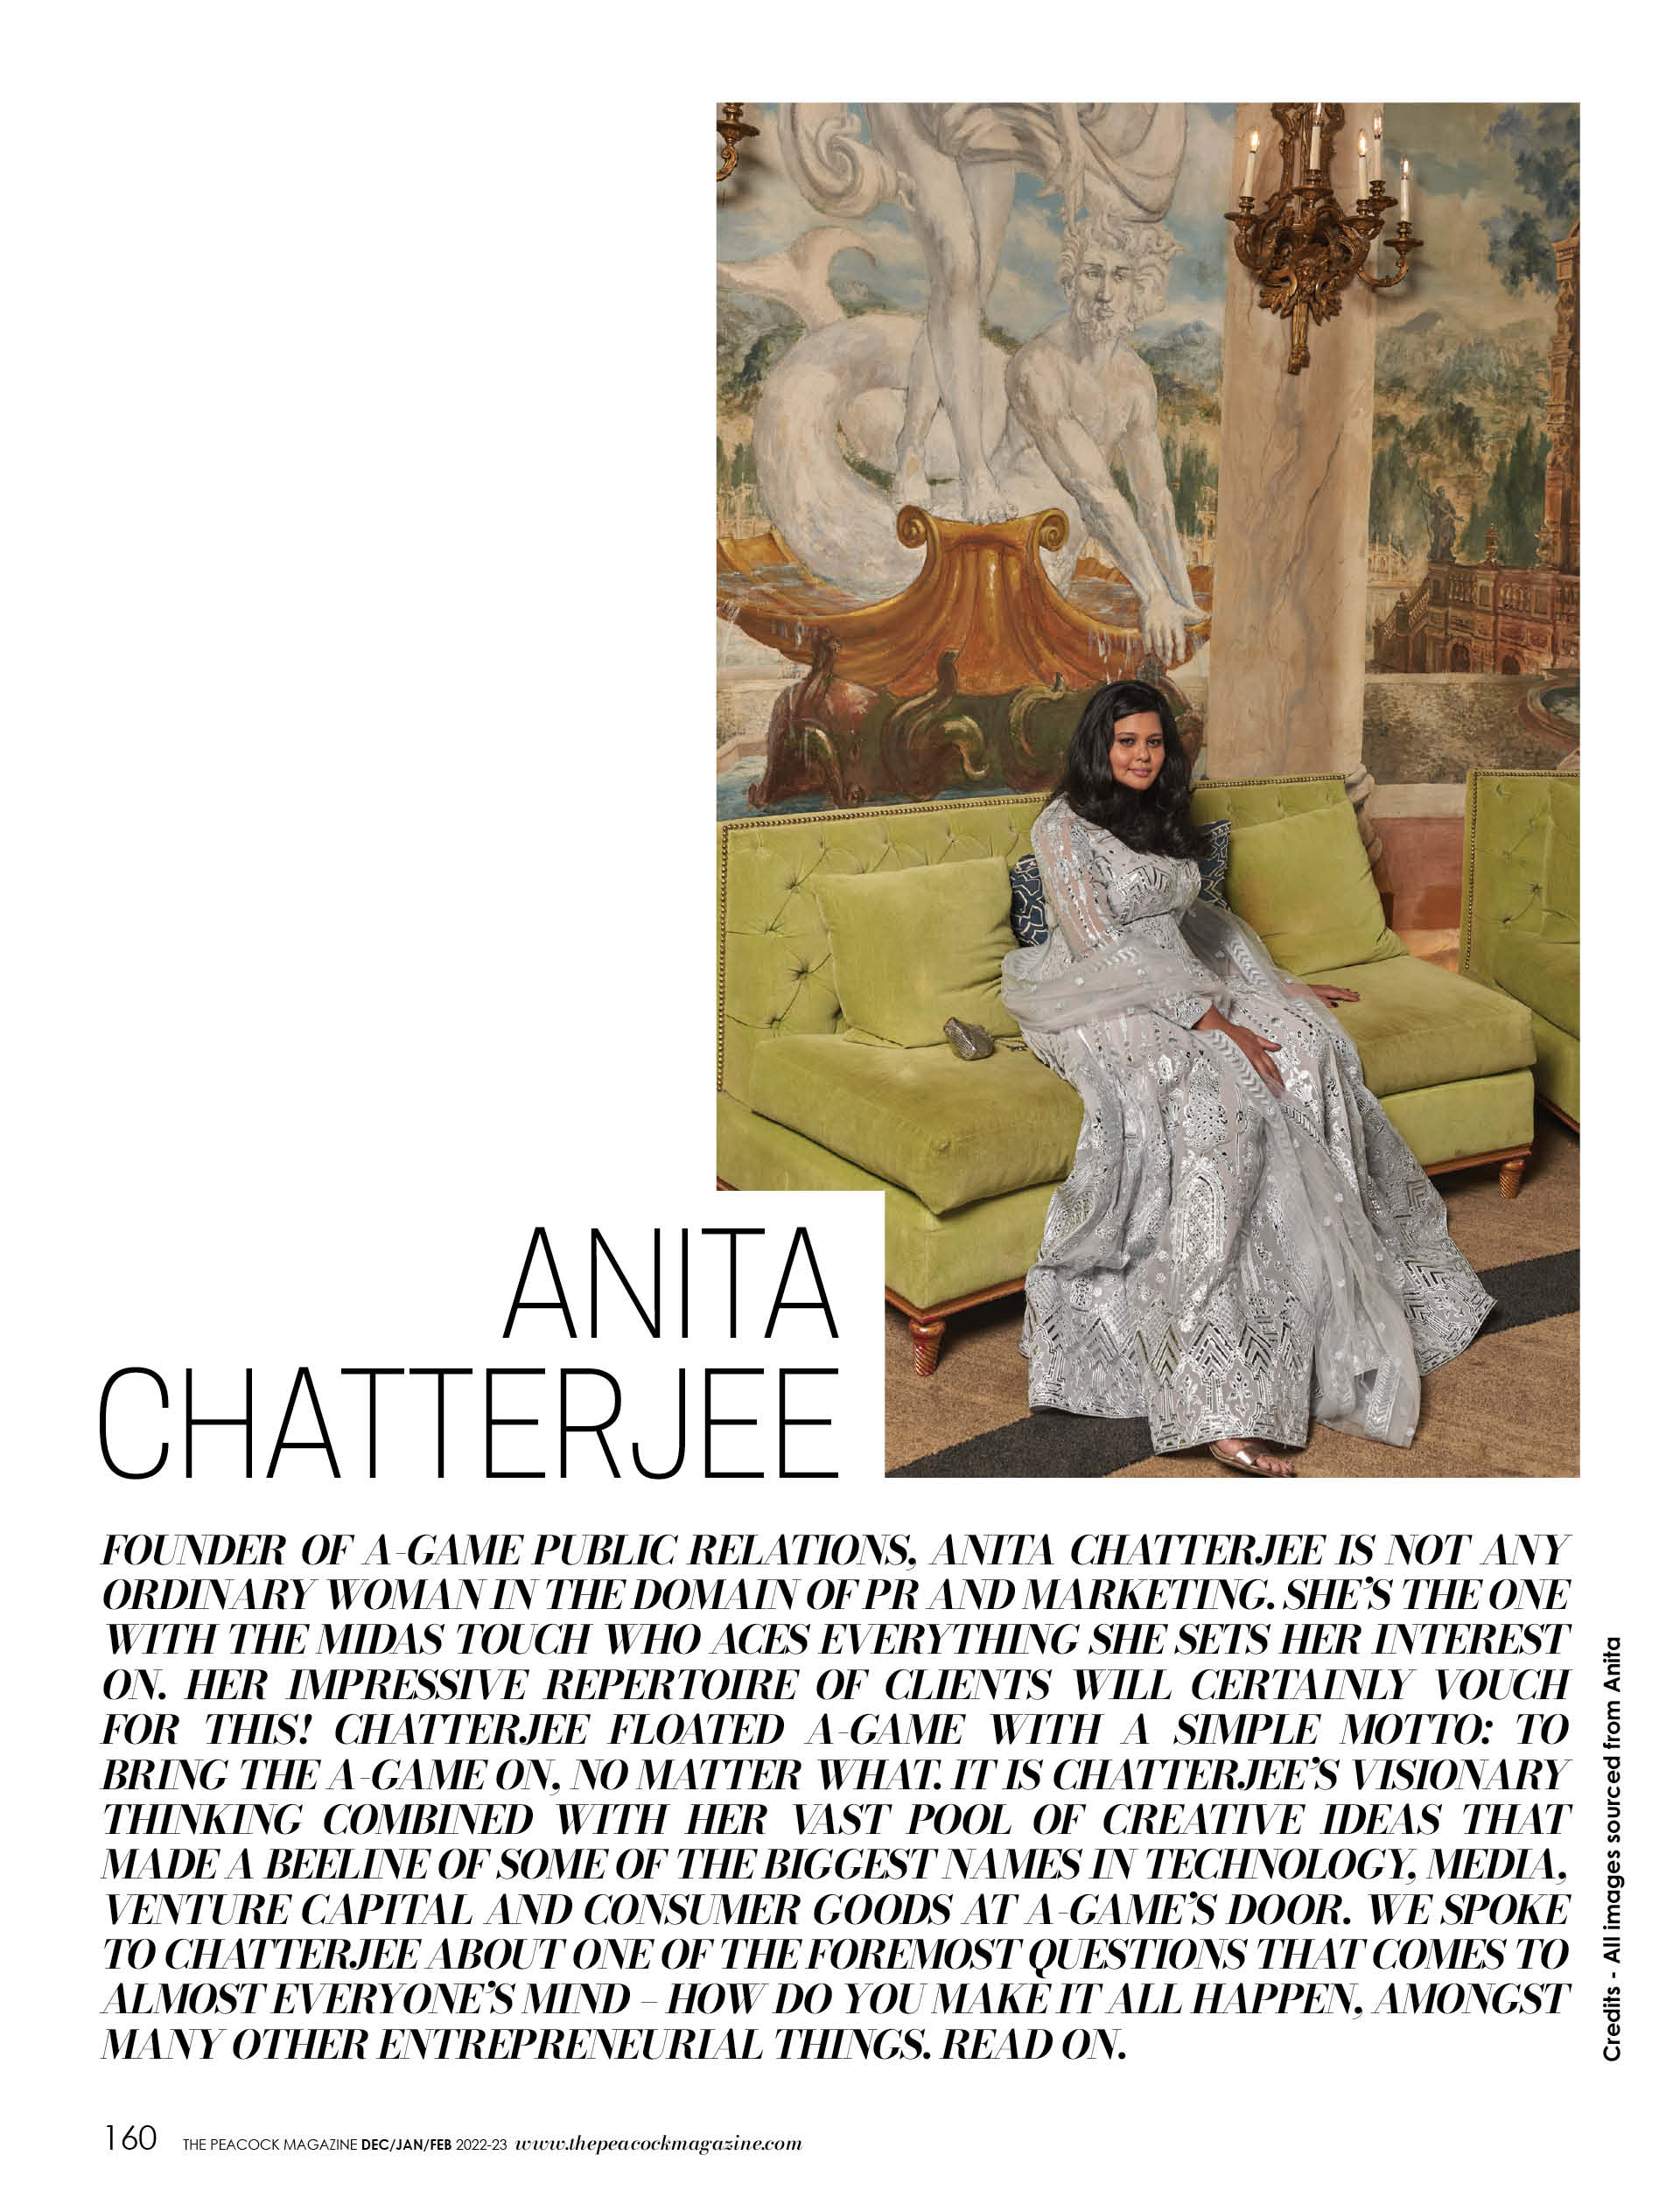 anita-chatterjee-the peacock magazine